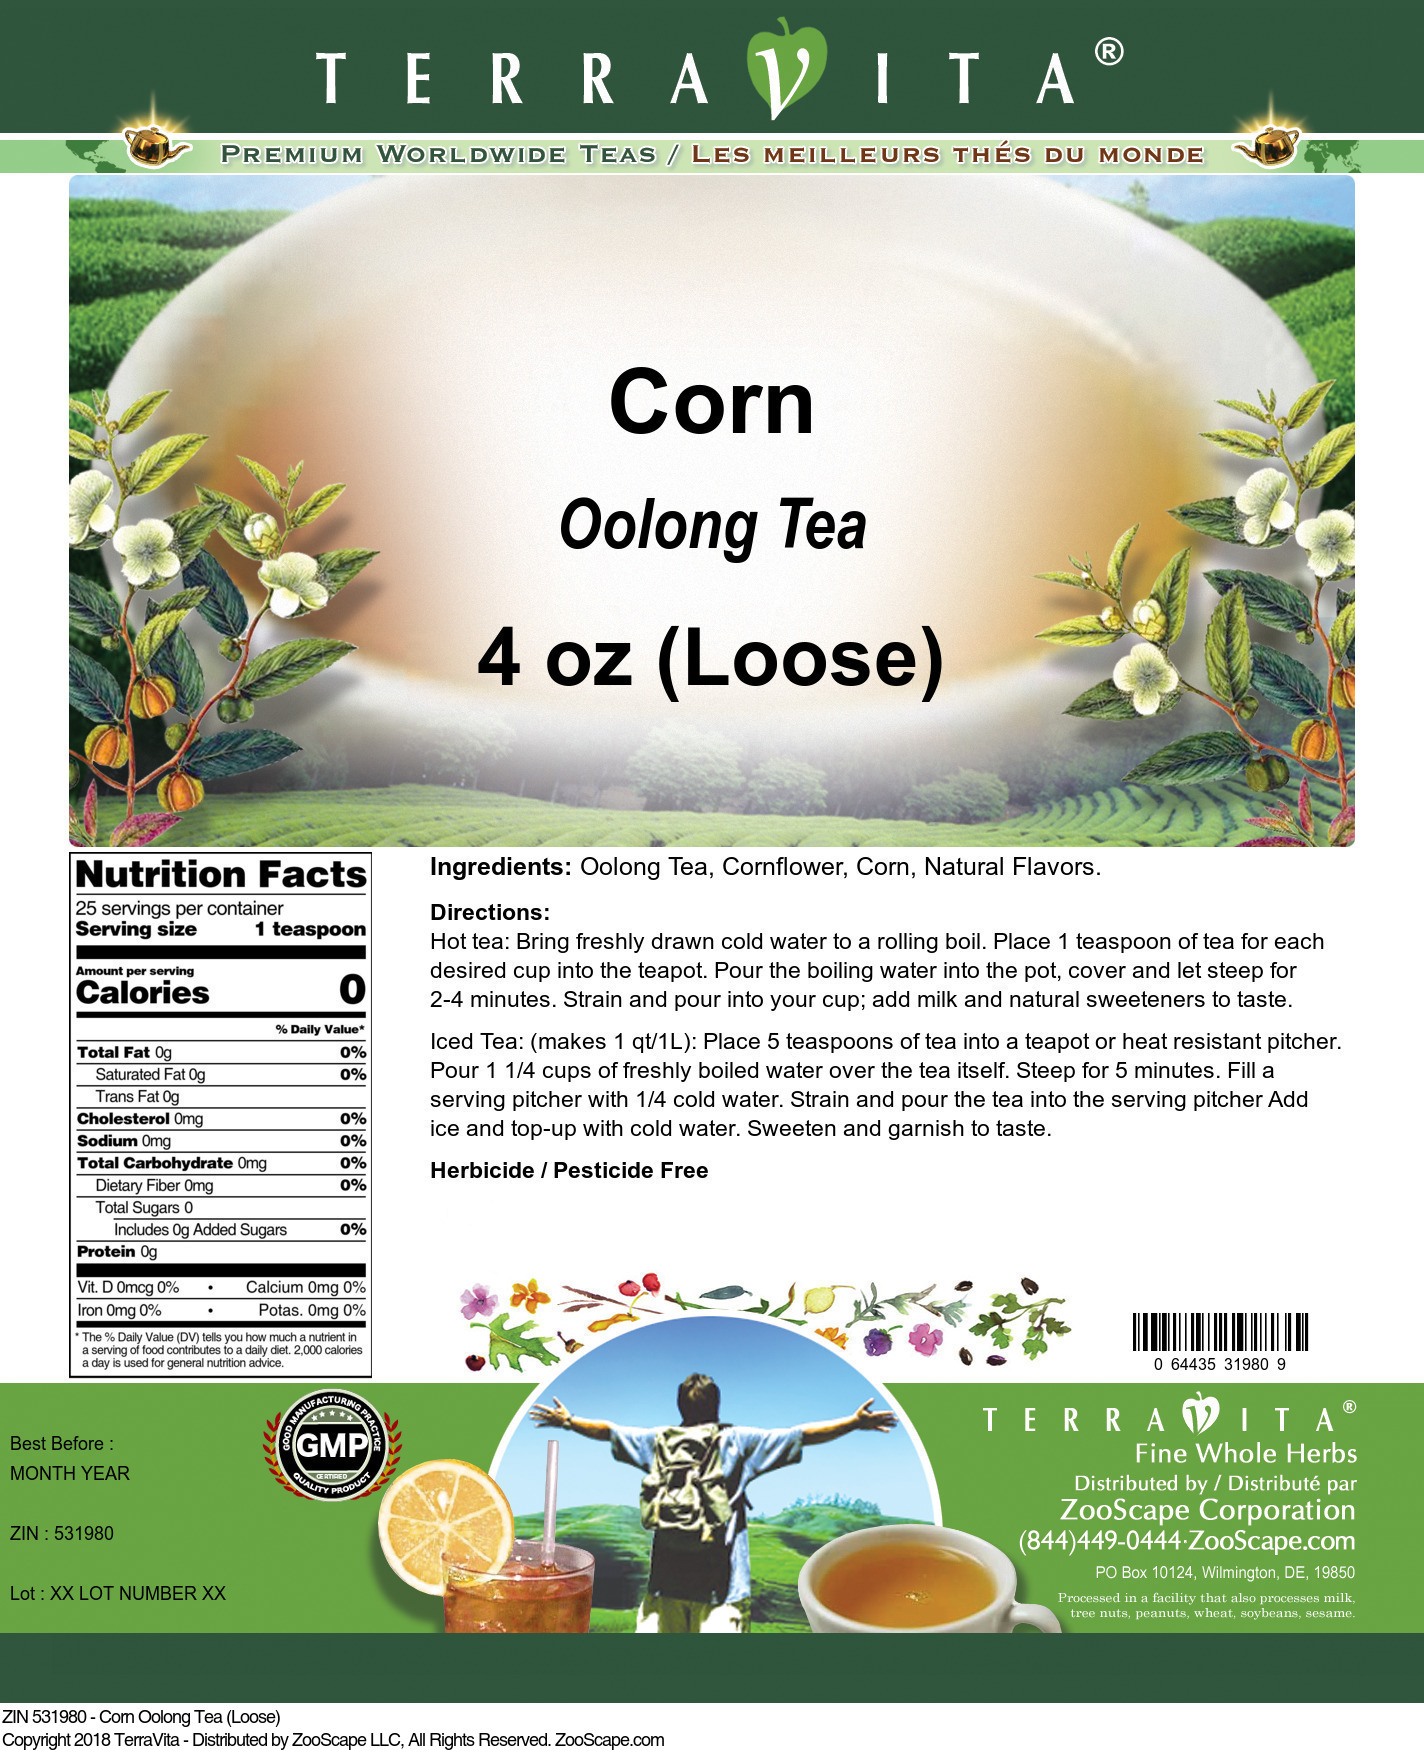 Corn Oolong Tea (Loose) - Label